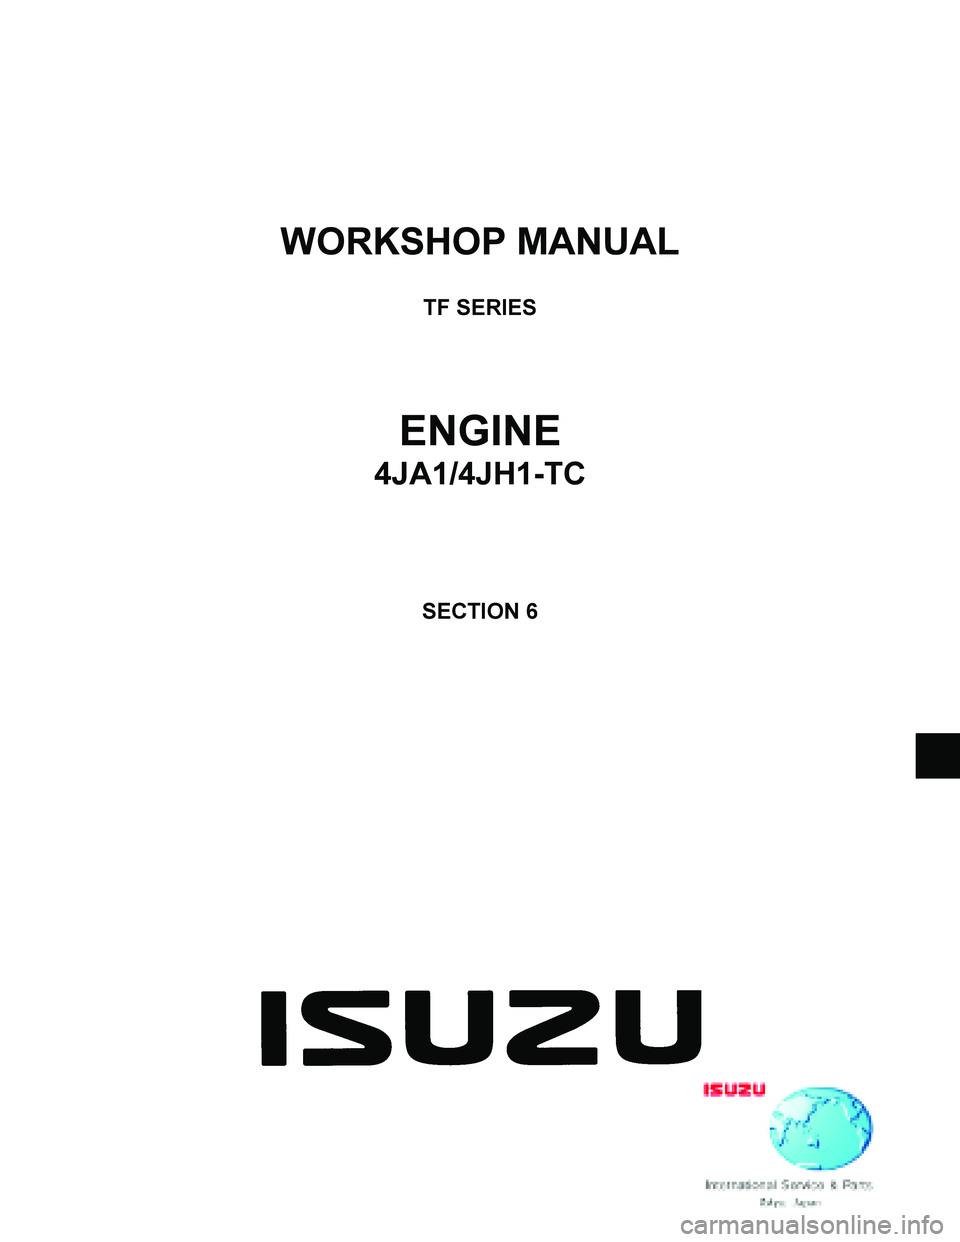 ISUZU TF SERIES 2004  Workshop Manual  
WORKSHOP MANUAL 
 
TF SERIES 
 
 
 
 
ENGINE 
4JA1/4JH1-TC 
 
 
 
 
 
SECTION 6 
 
 
  